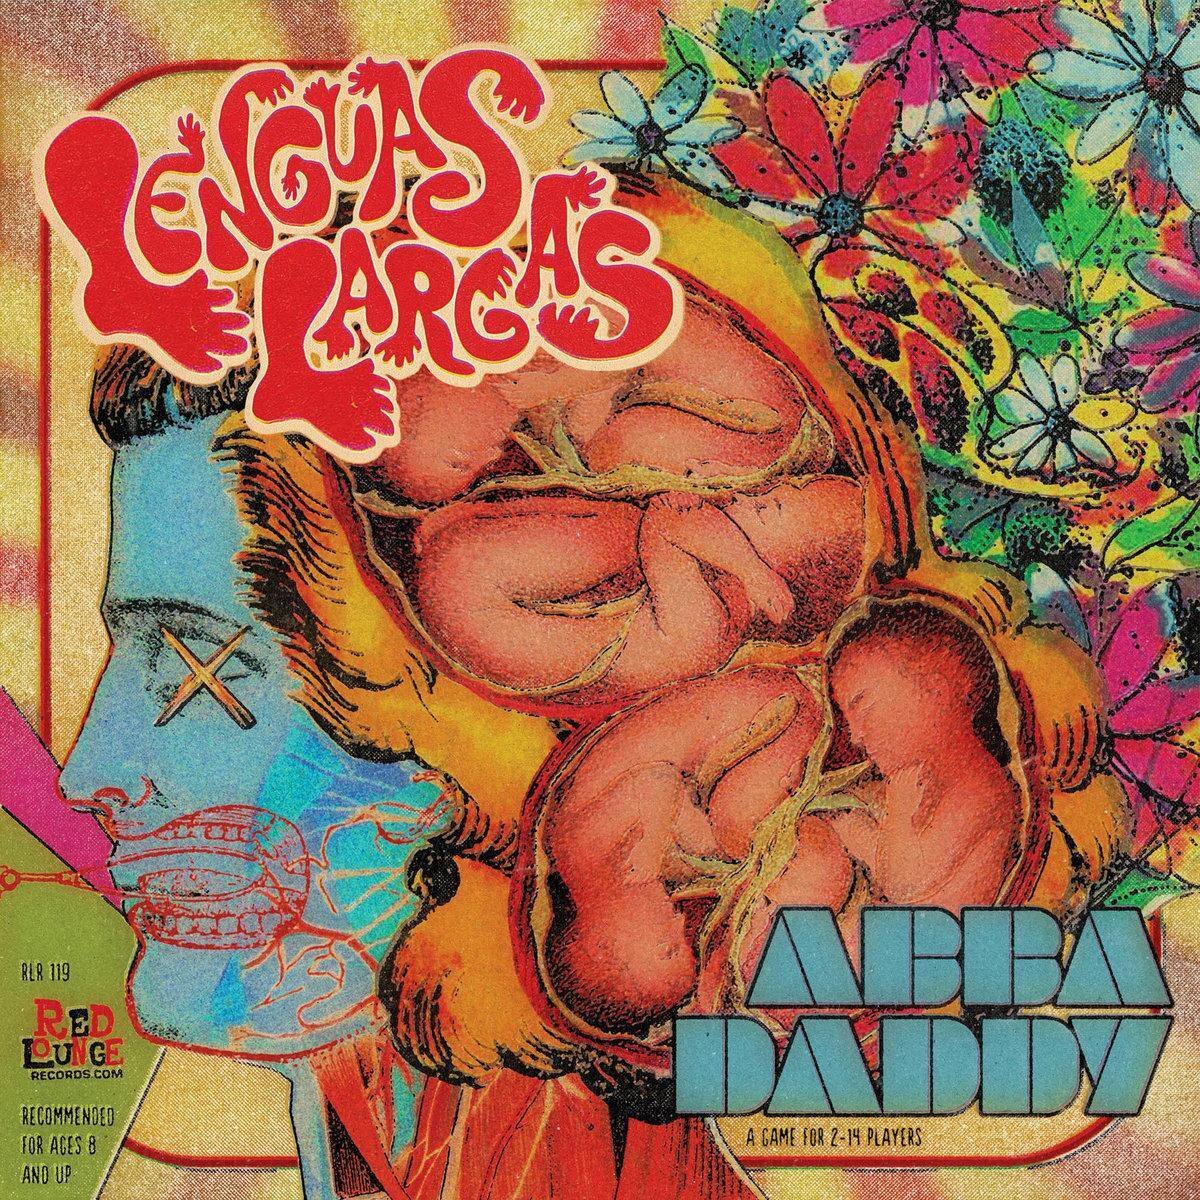 Sonic Rendezvous Lenguas Largas - Abba Daddy